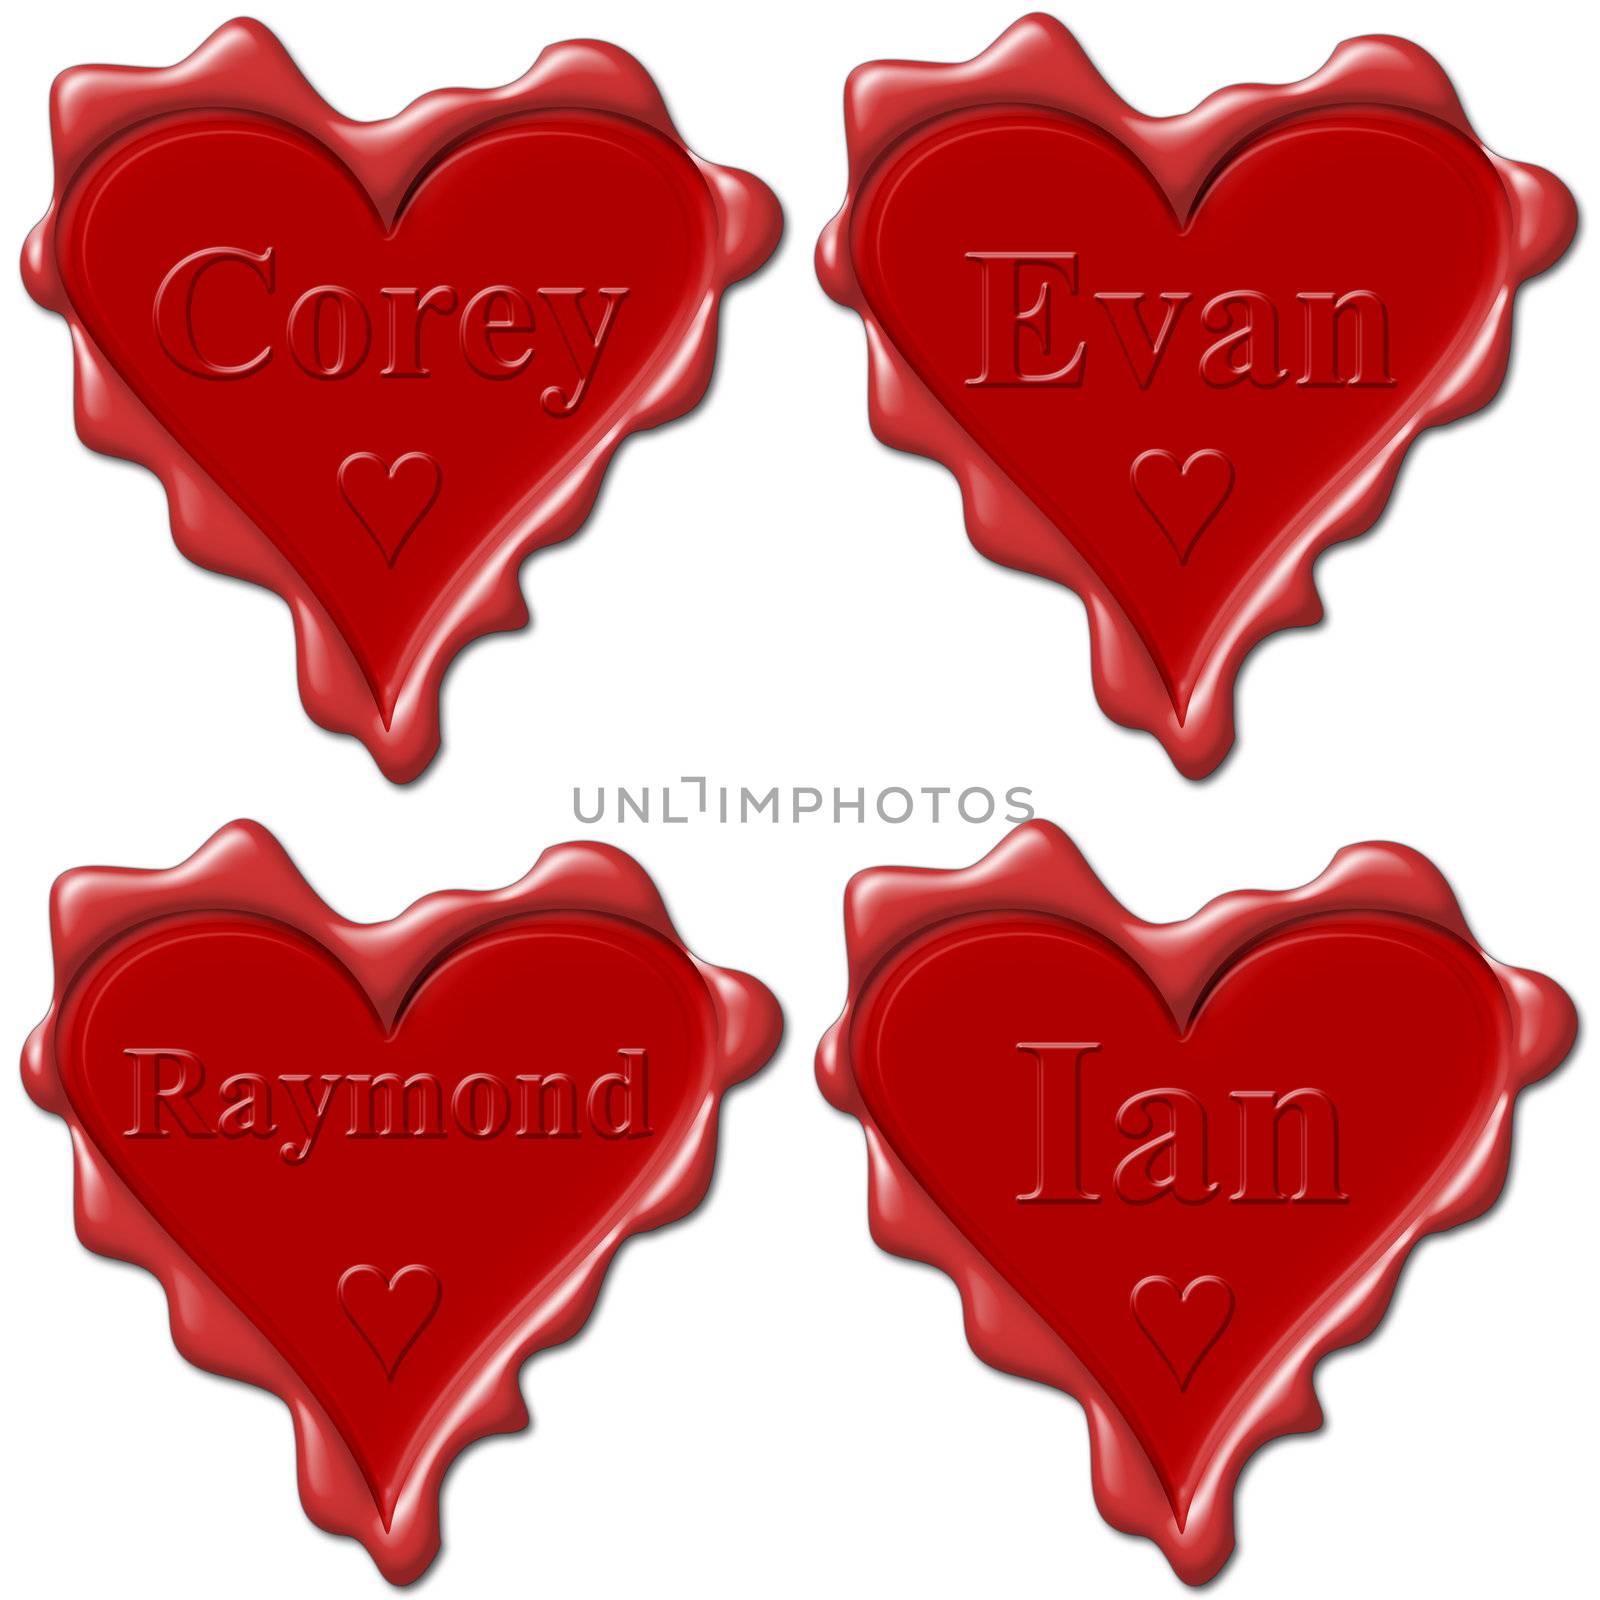 Valentine love hearts with names: Corey, Evan, Raymond, Ian by mozzyb